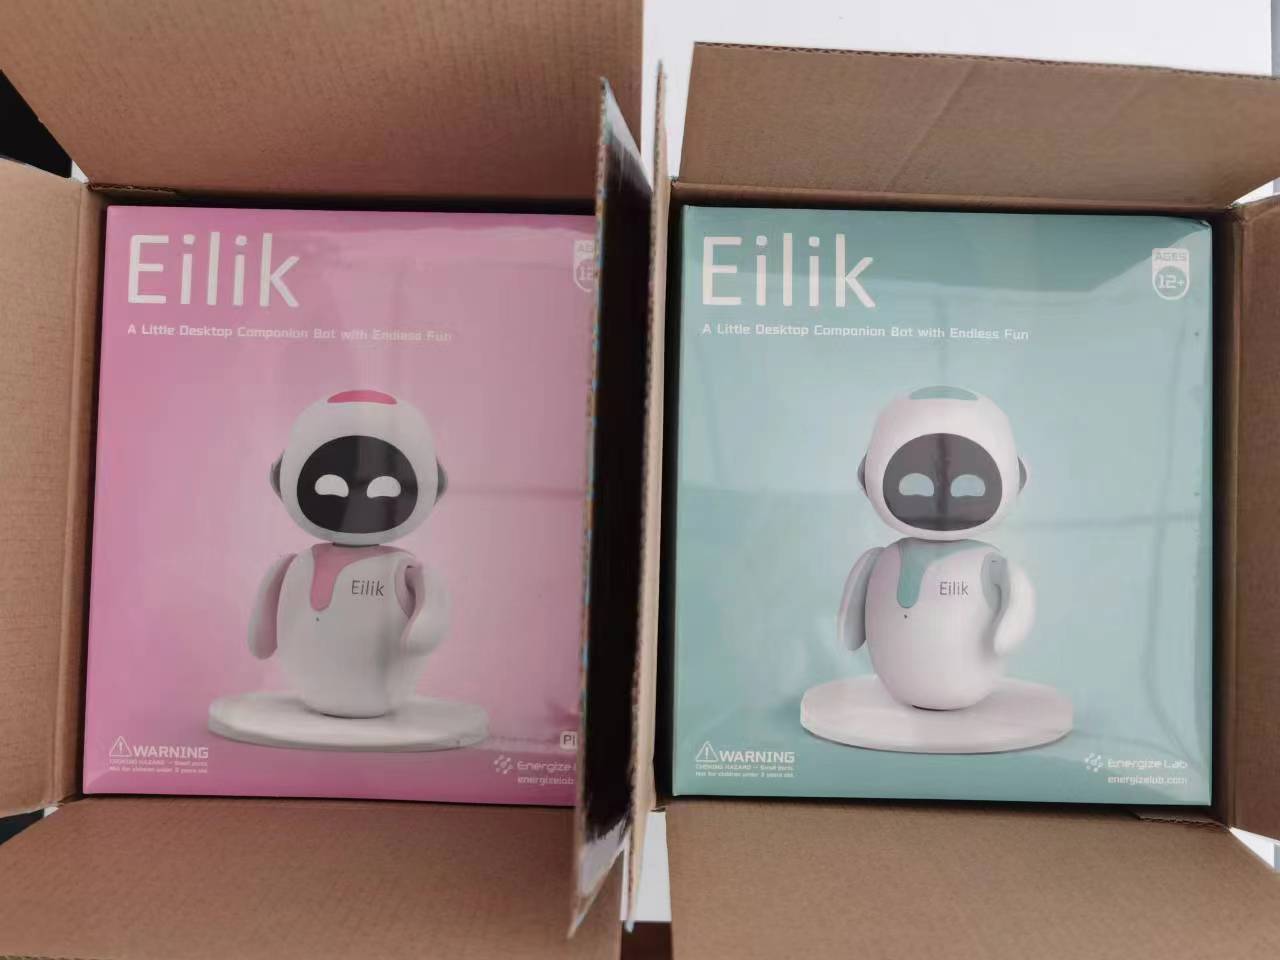 Eilik Robot - Unboxing & First Impression #robotics 